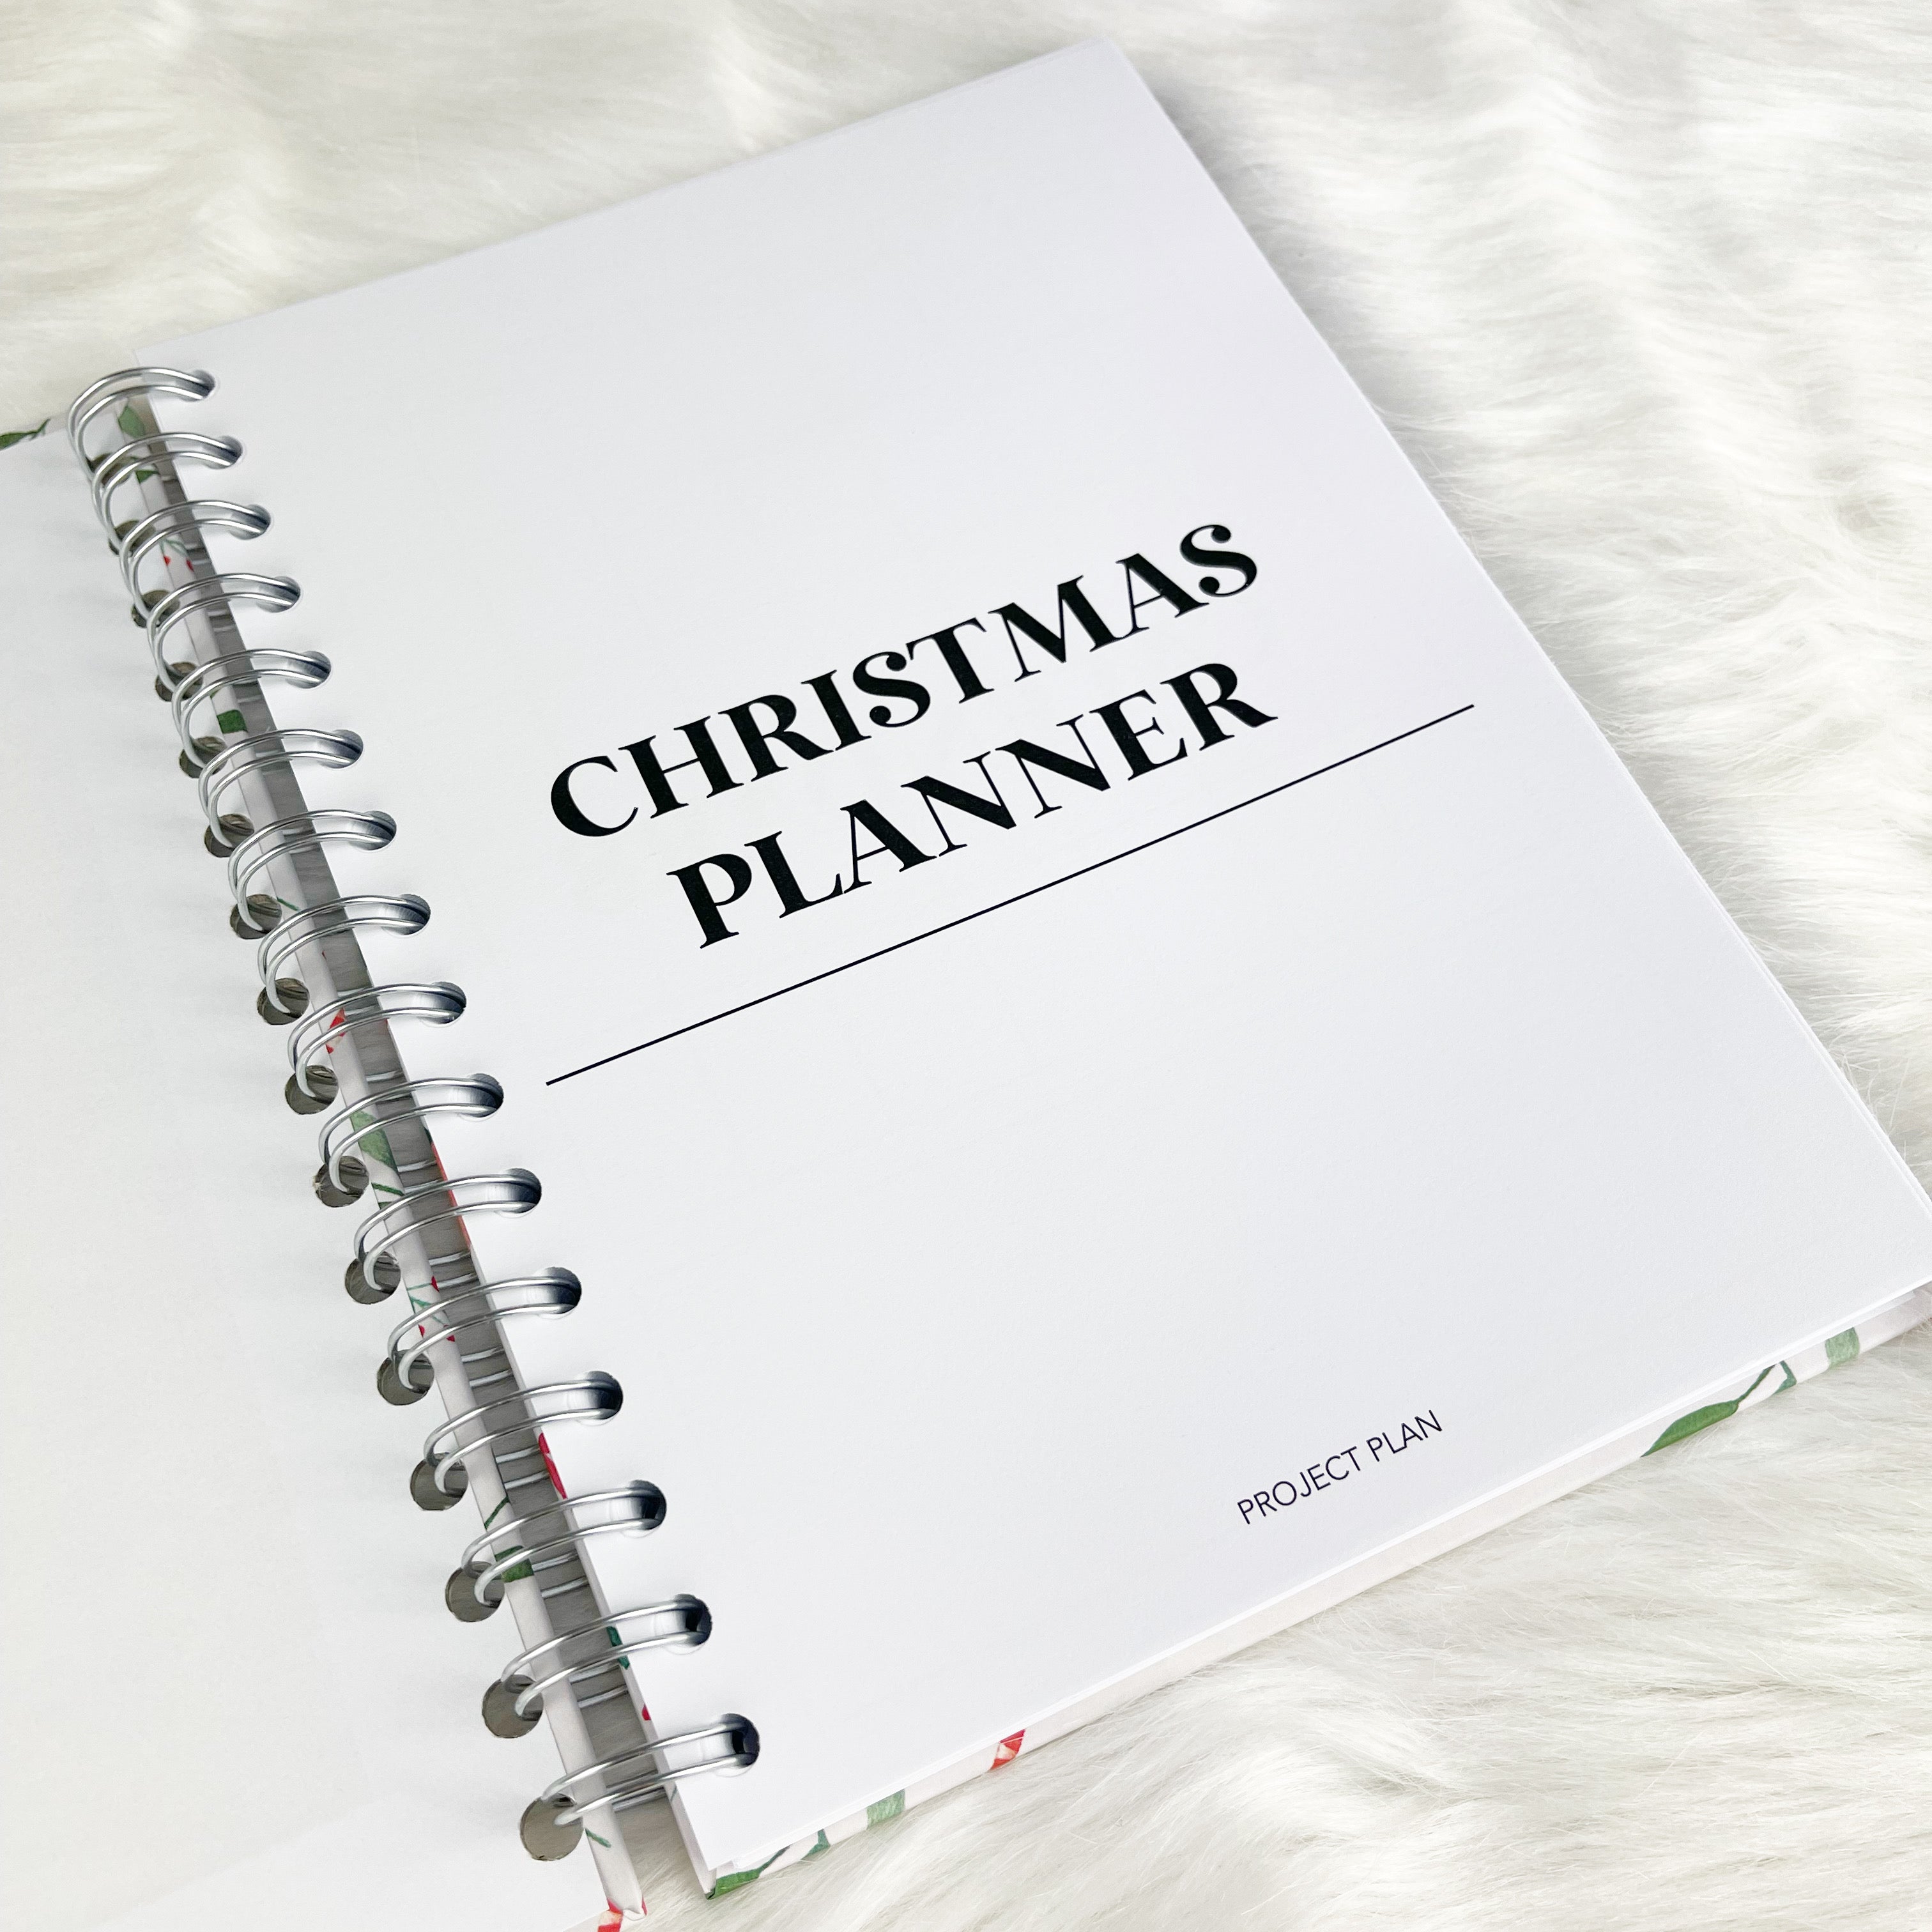 Ultimate Christmas Planner